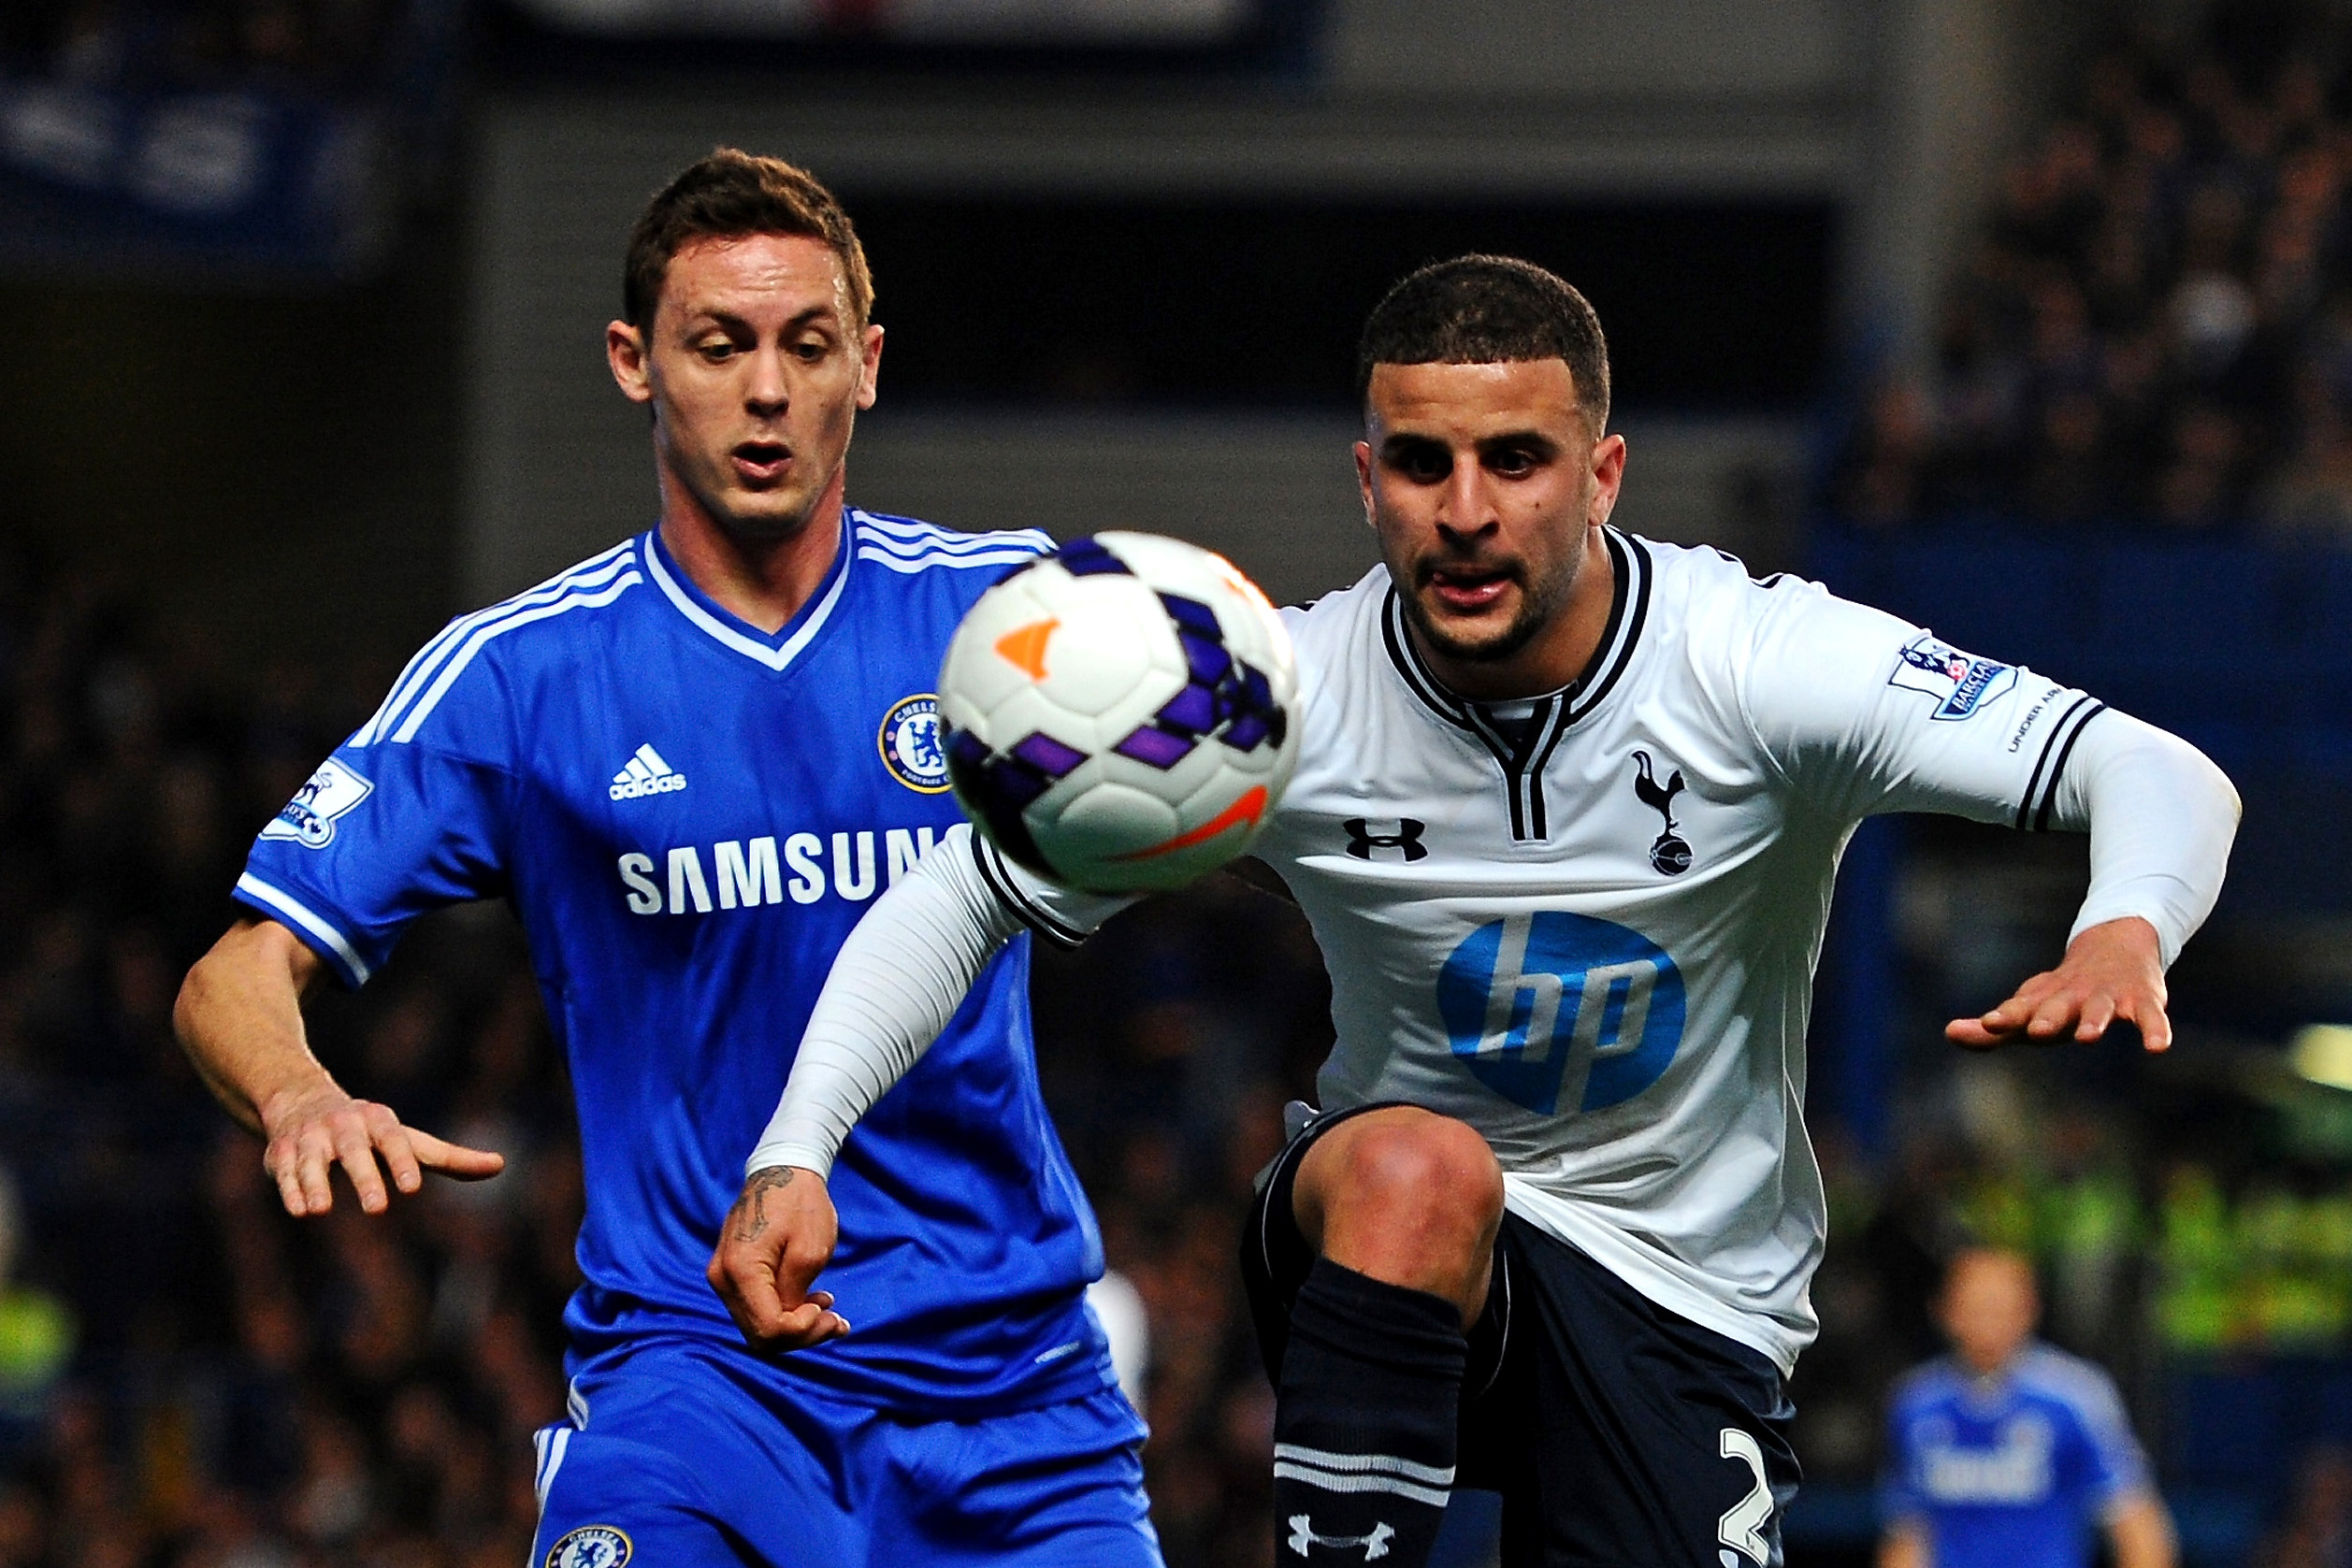 Tottenham vs Chelsea Highlights: TOT 1 - 4 CHE, Jackson's scores